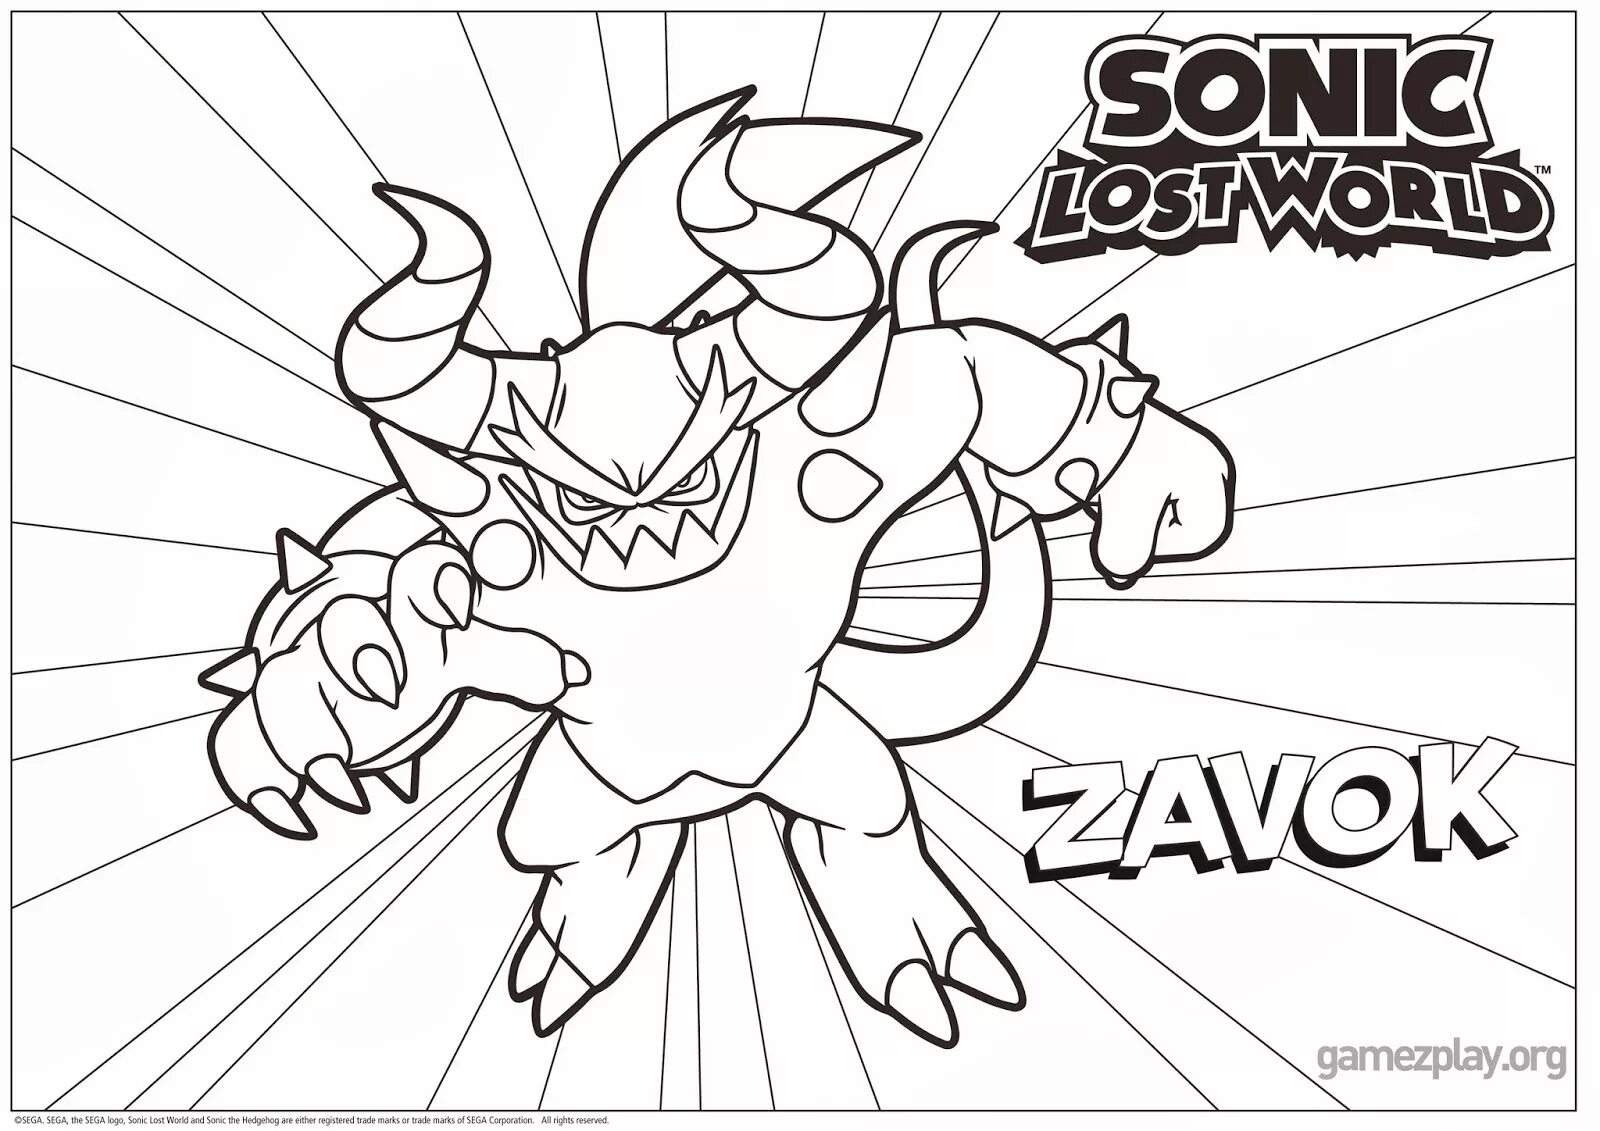 Venom sonic coloring page